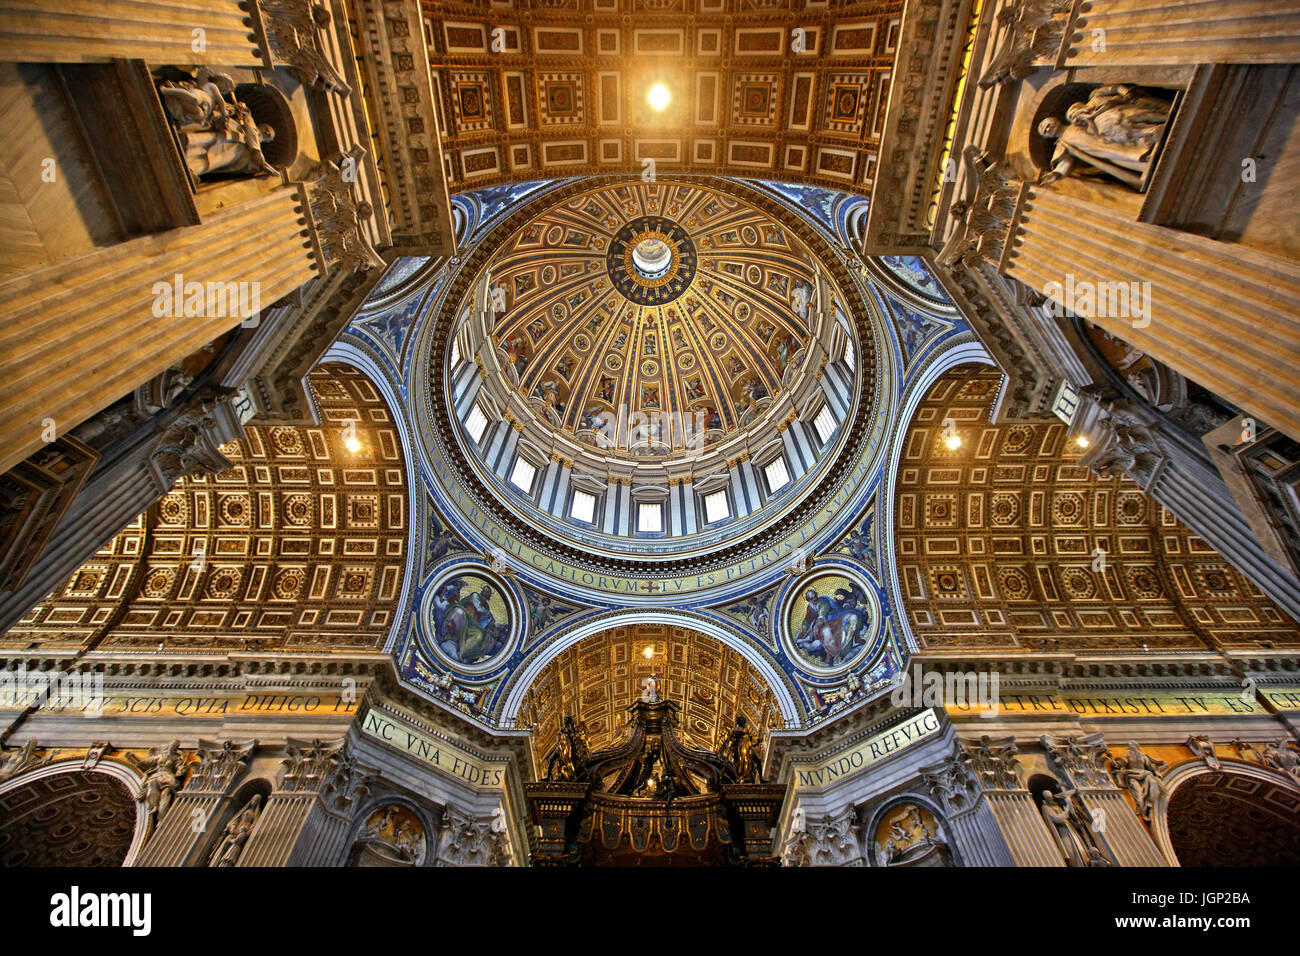 Die imposante Kuppel der St. Peter Basilika, Vatikanstadt. Stockfoto